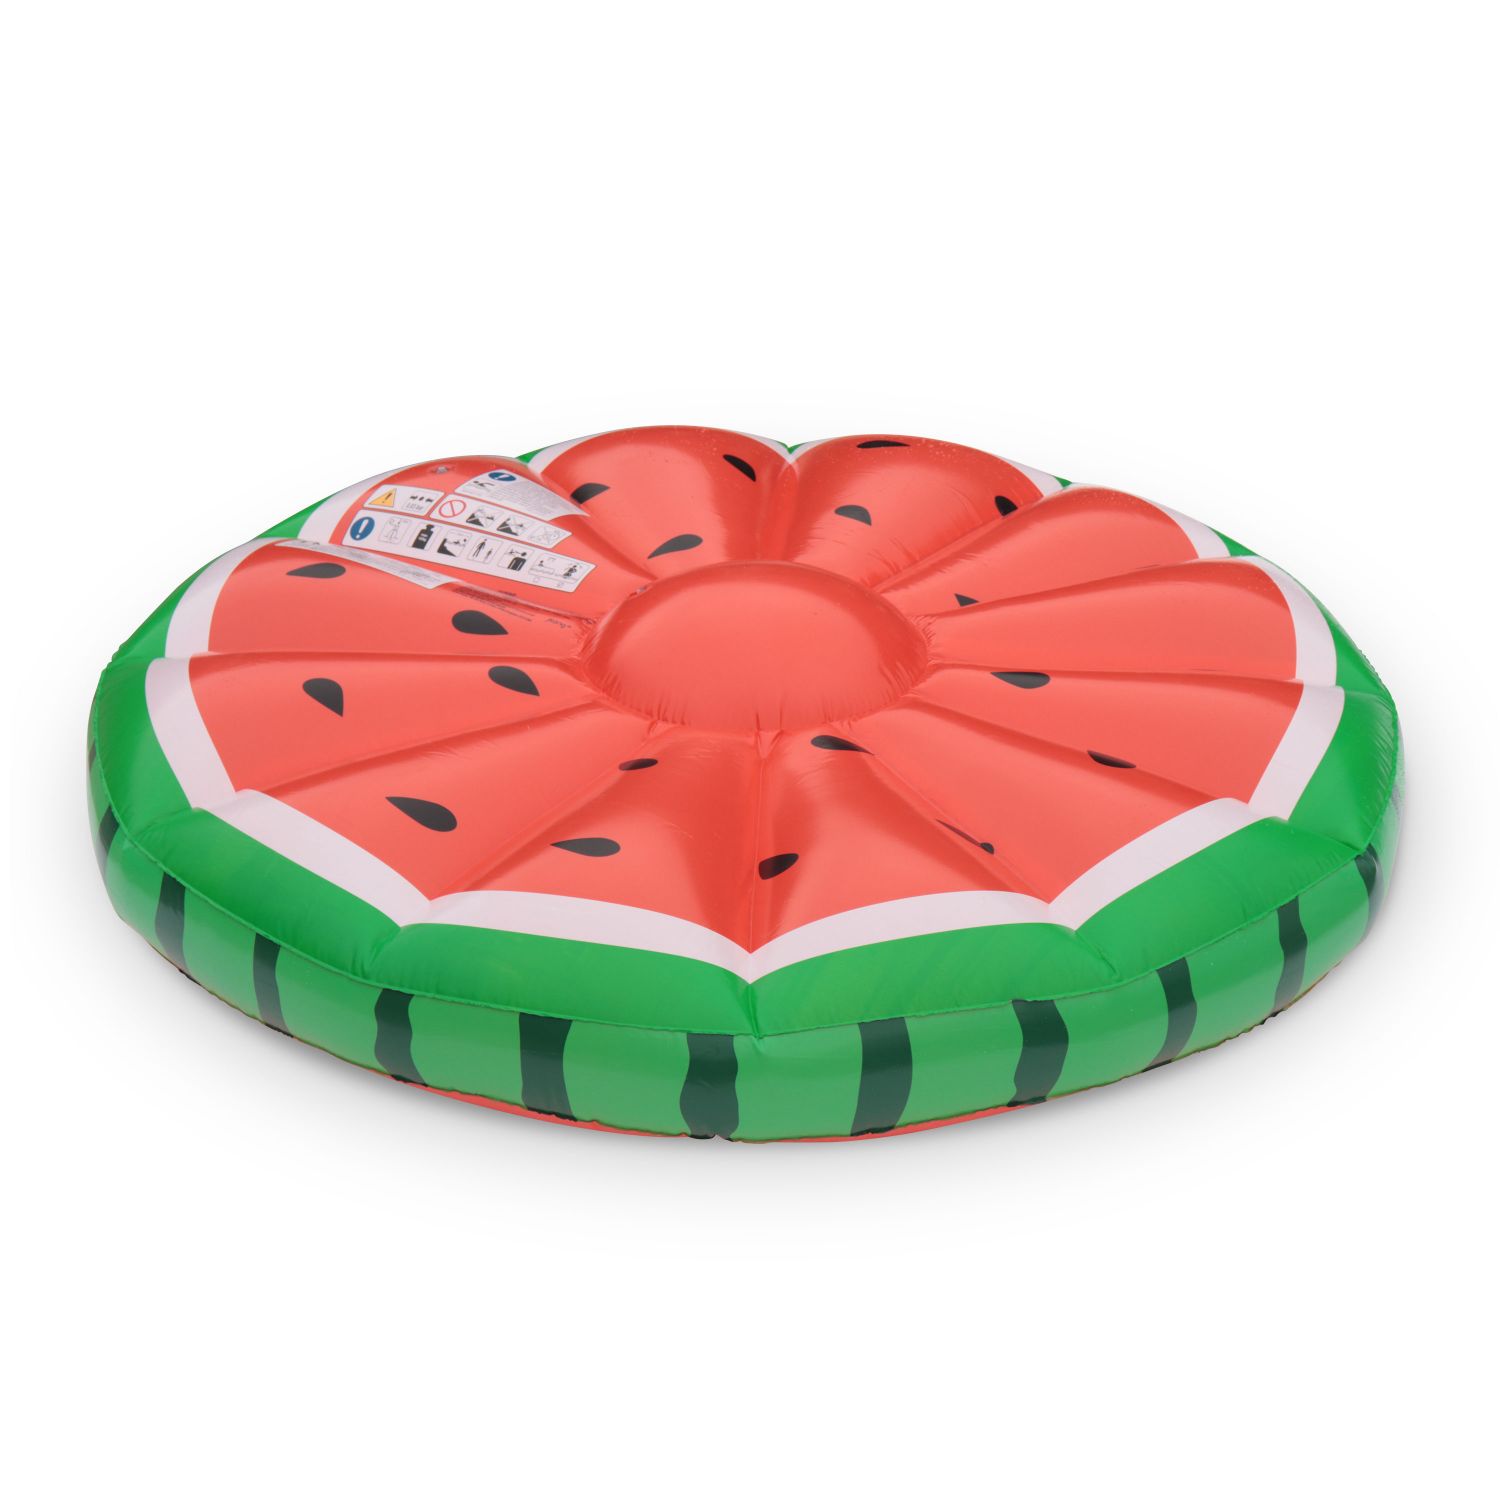 Baby evenaar replica Drijvend luchtbed watermeloen, Ø 145 cm, WATERMELON M, rond opblaasbaar  luchtbed, drijvend eiland in watermeloen vorm